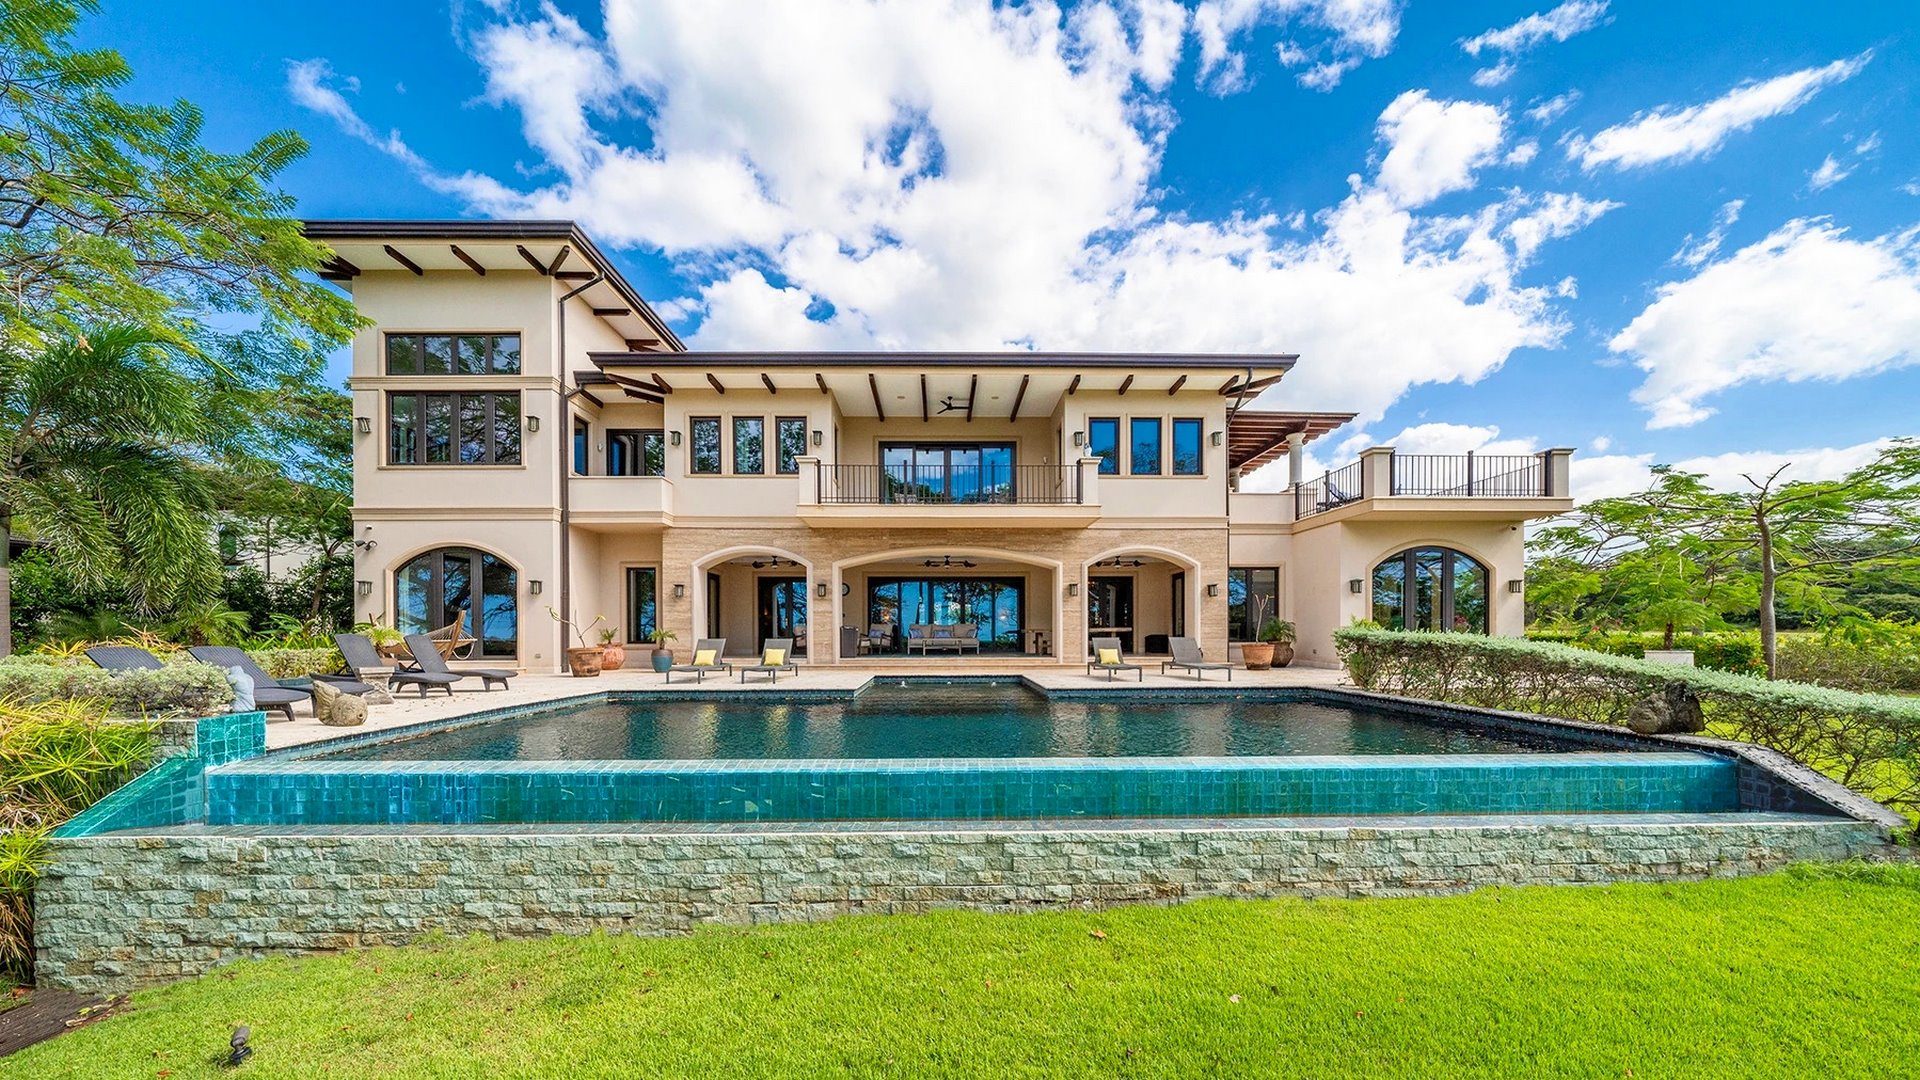 10919-Luxury beachfront property to buy in Costa Rica